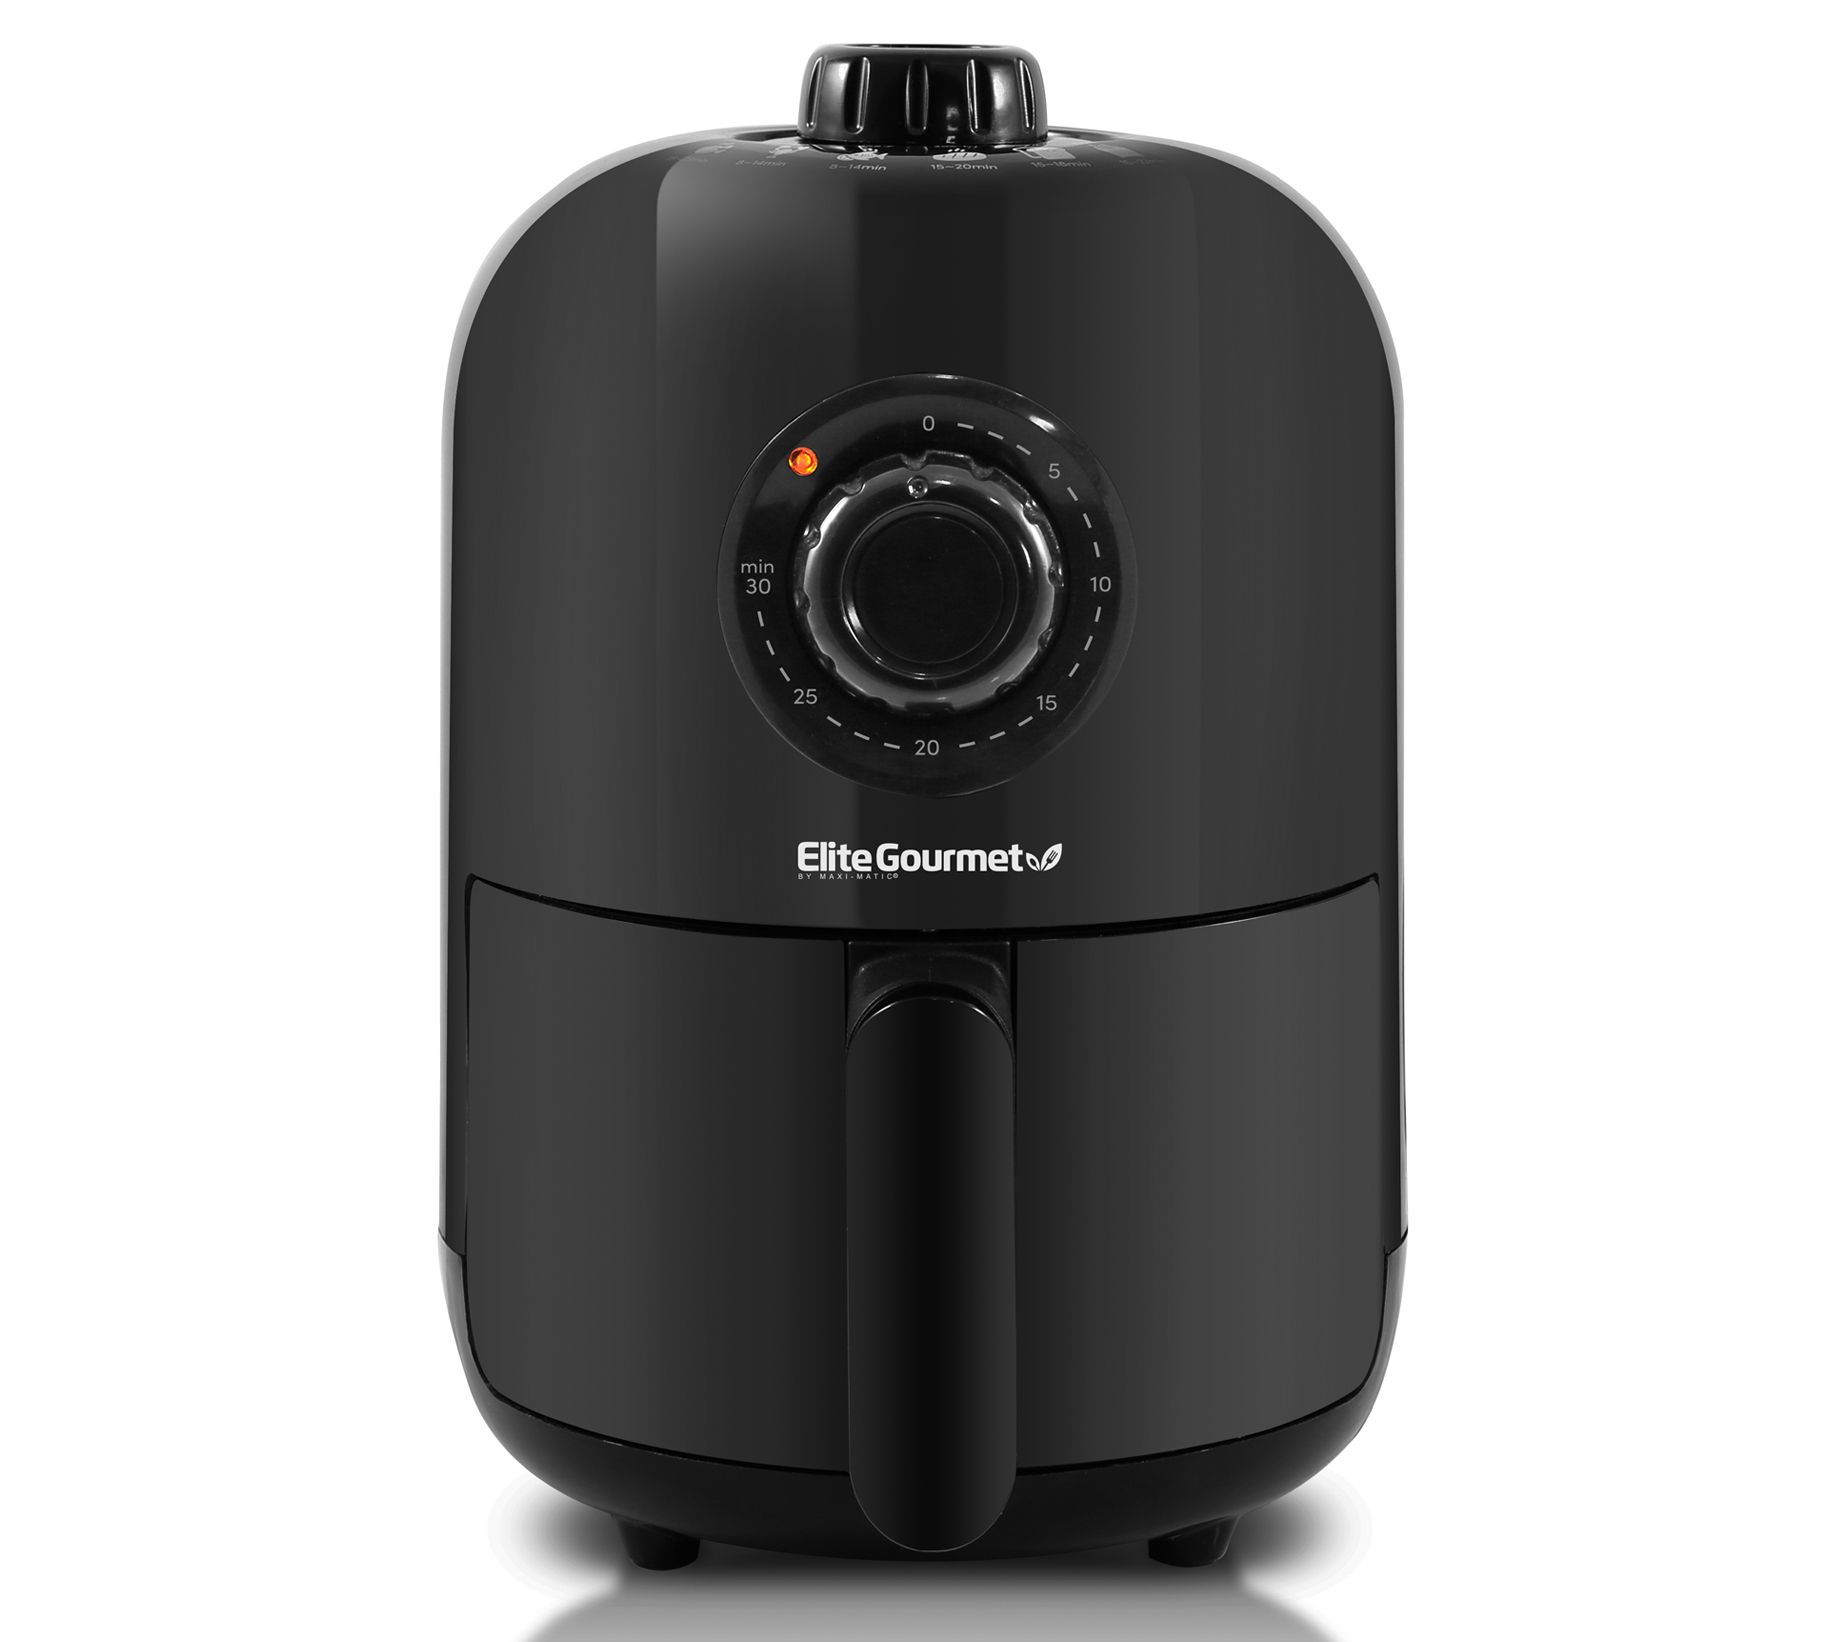 Toastmaster 5 Quart Digital Air Fryer - Black